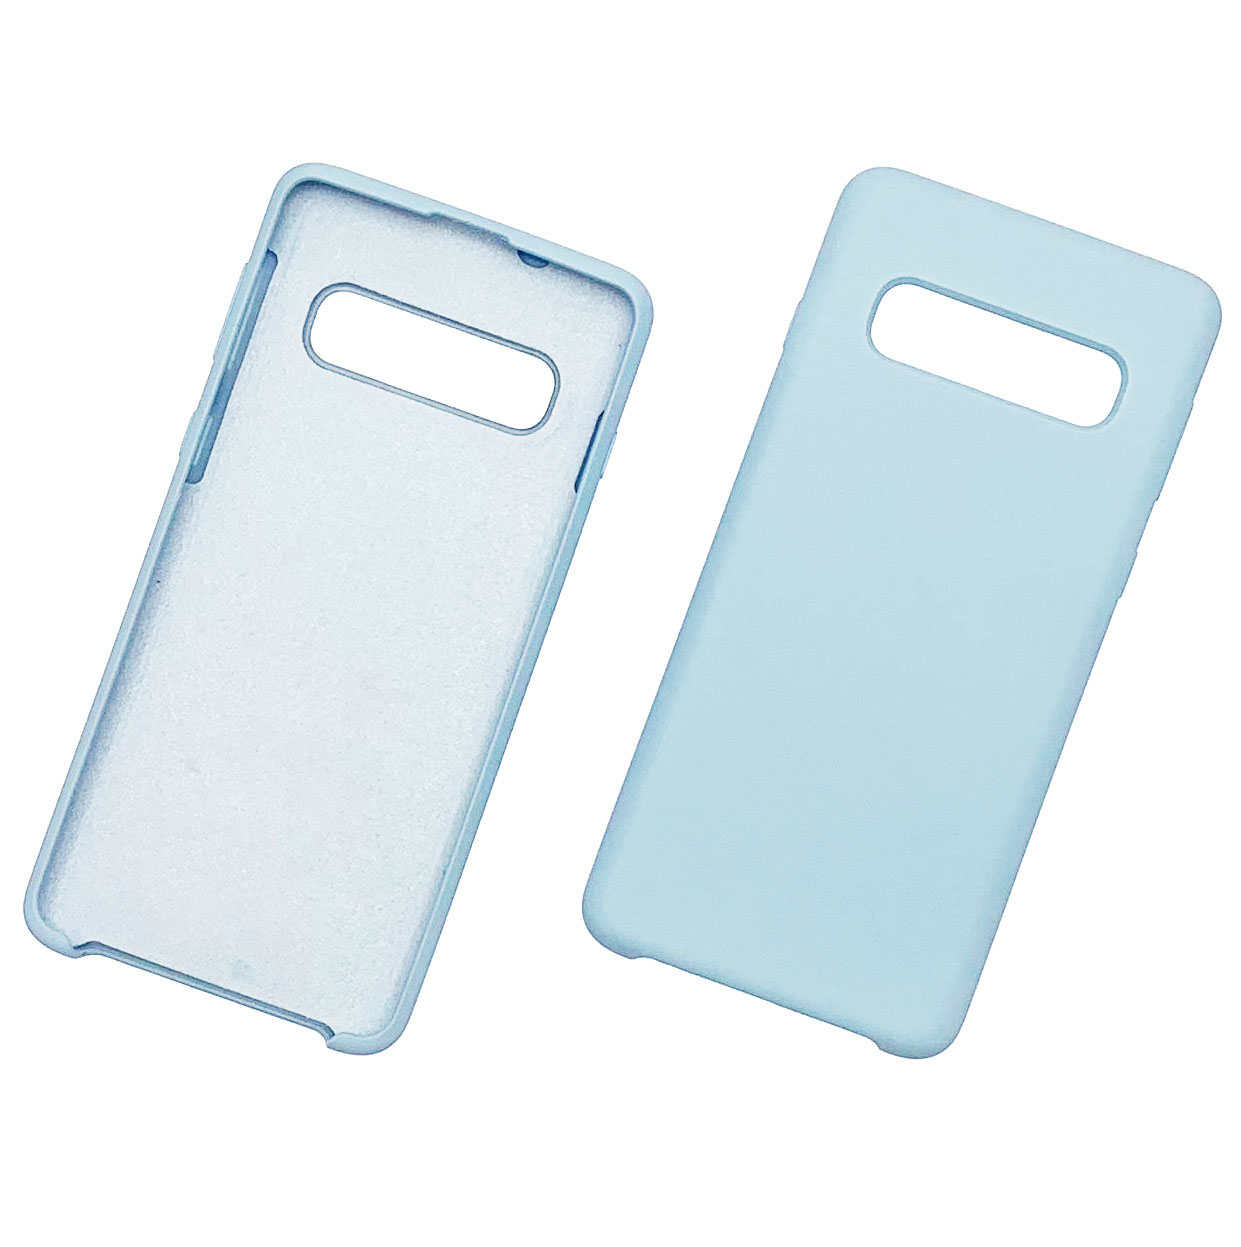 Чехол накладка Silicon Cover для SAMSUNG Galaxy S10 Plus (SM-G975), силикон, бархат, цвет голубой.